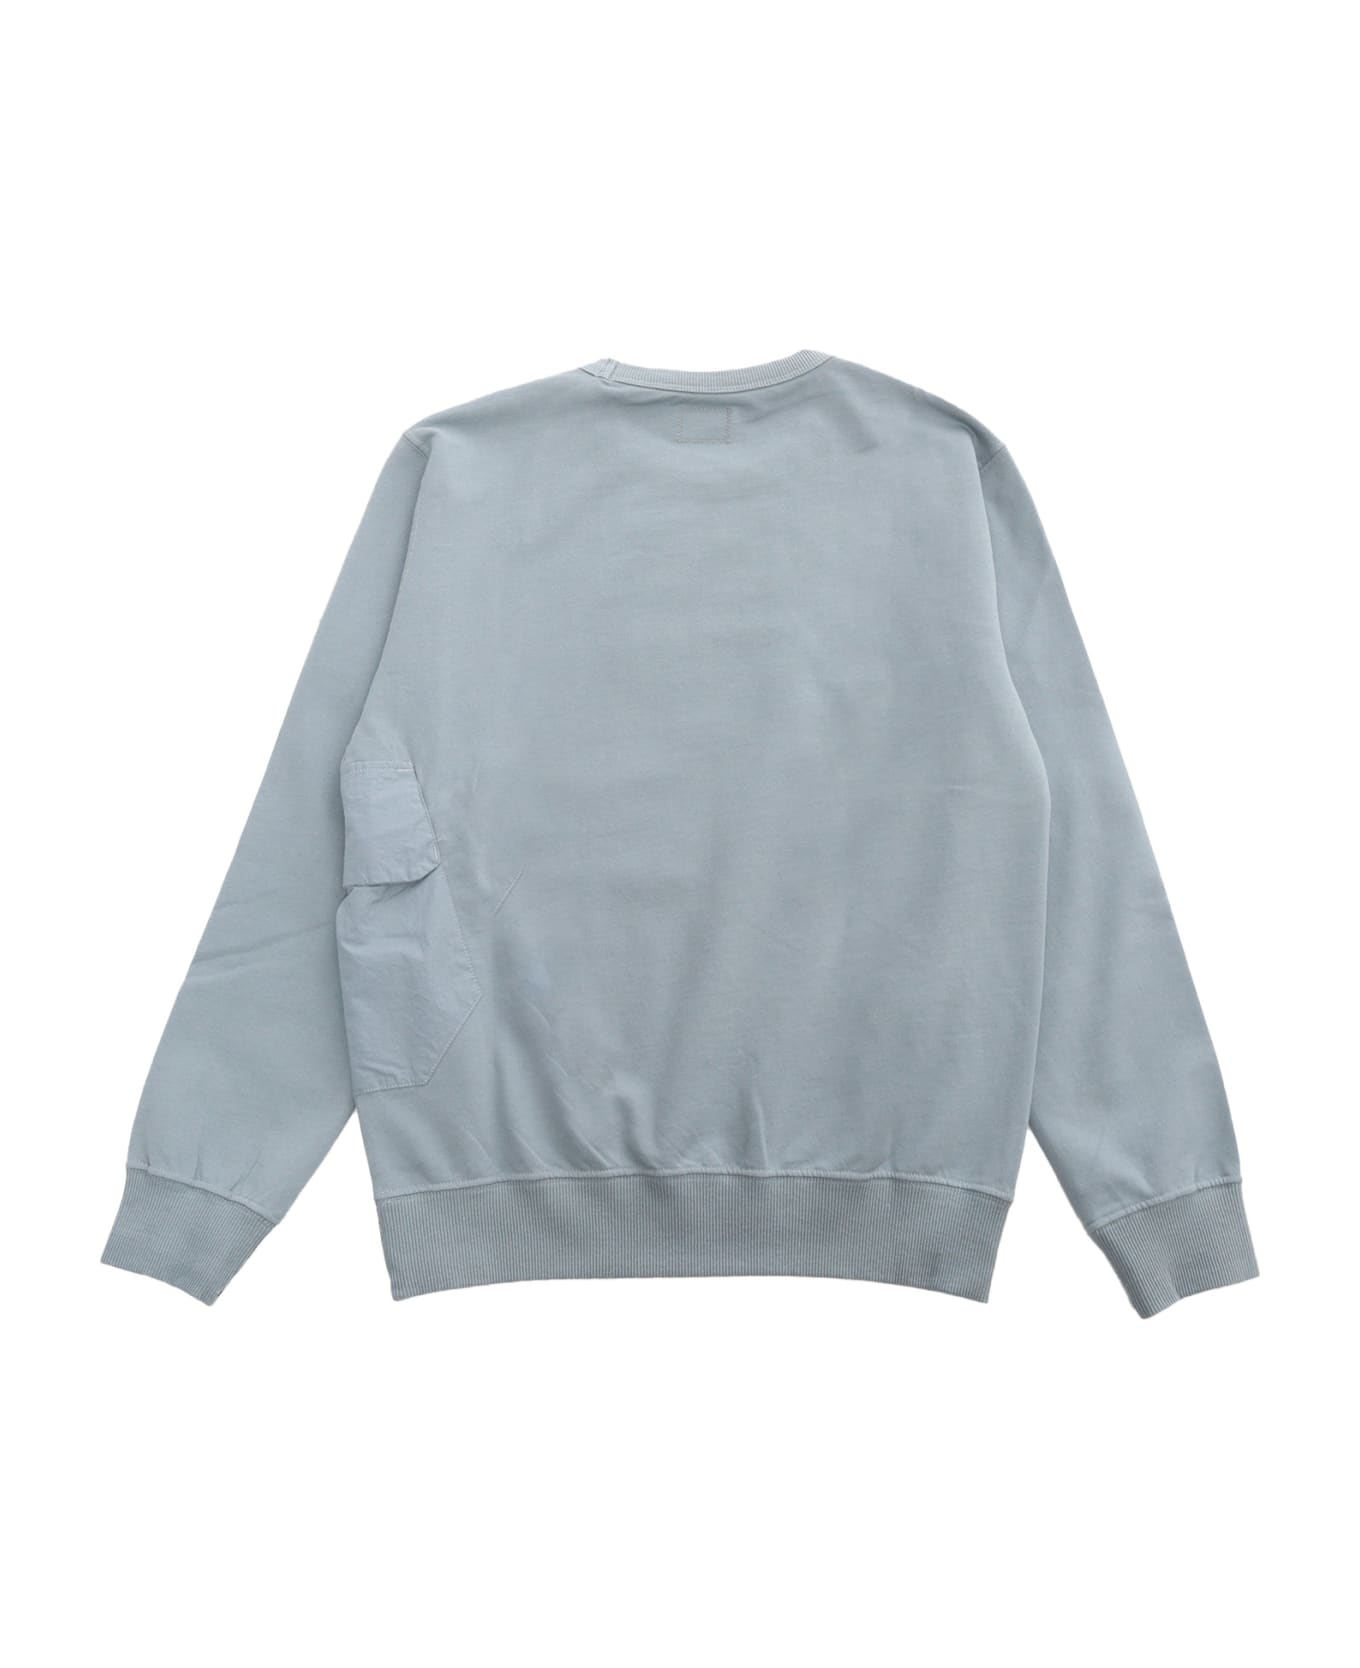 C.P. Company Undersixteen Grey Sweatshirt - GREY